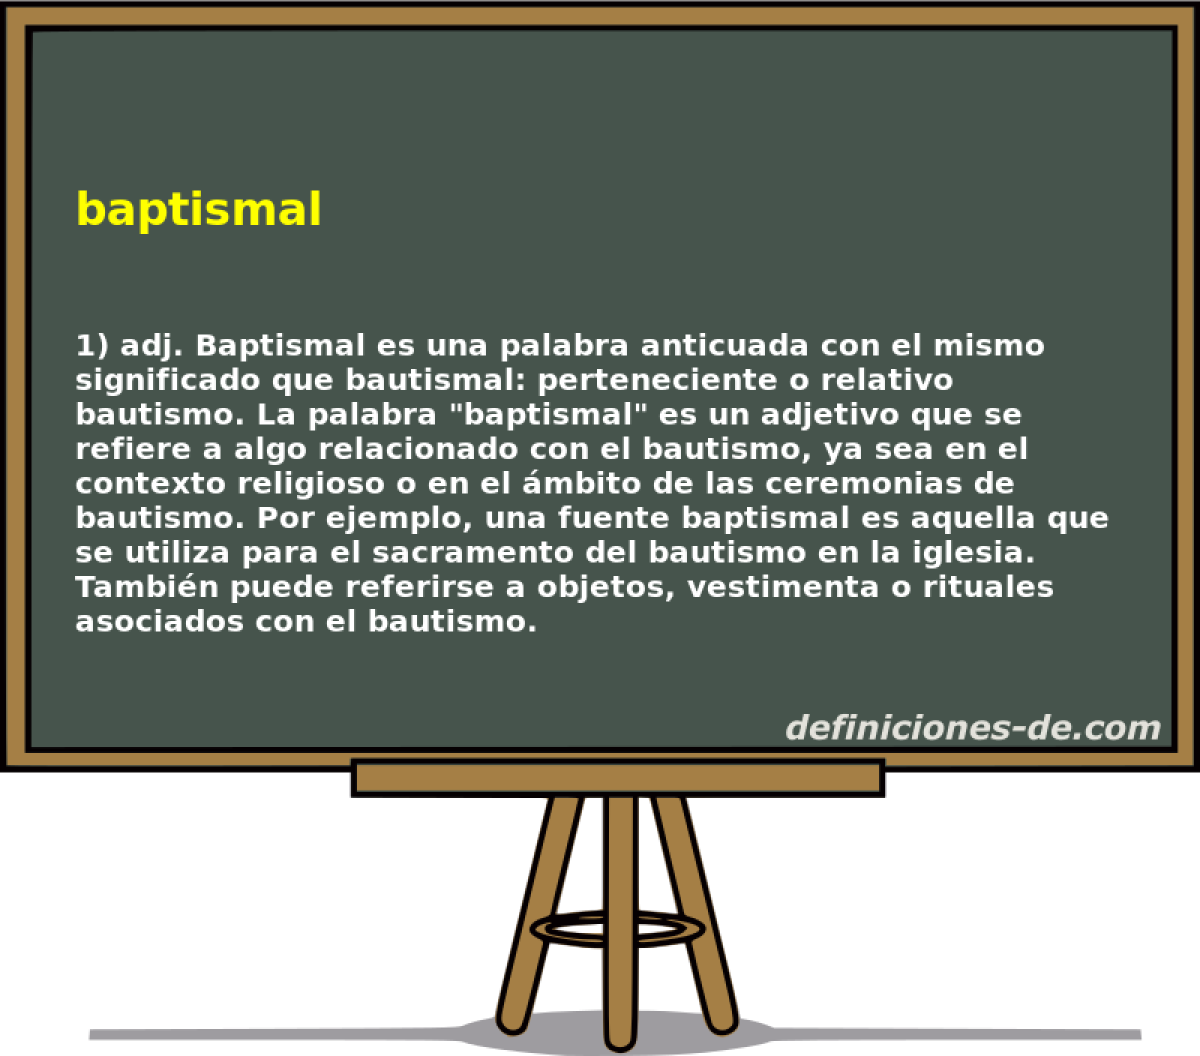 baptismal 